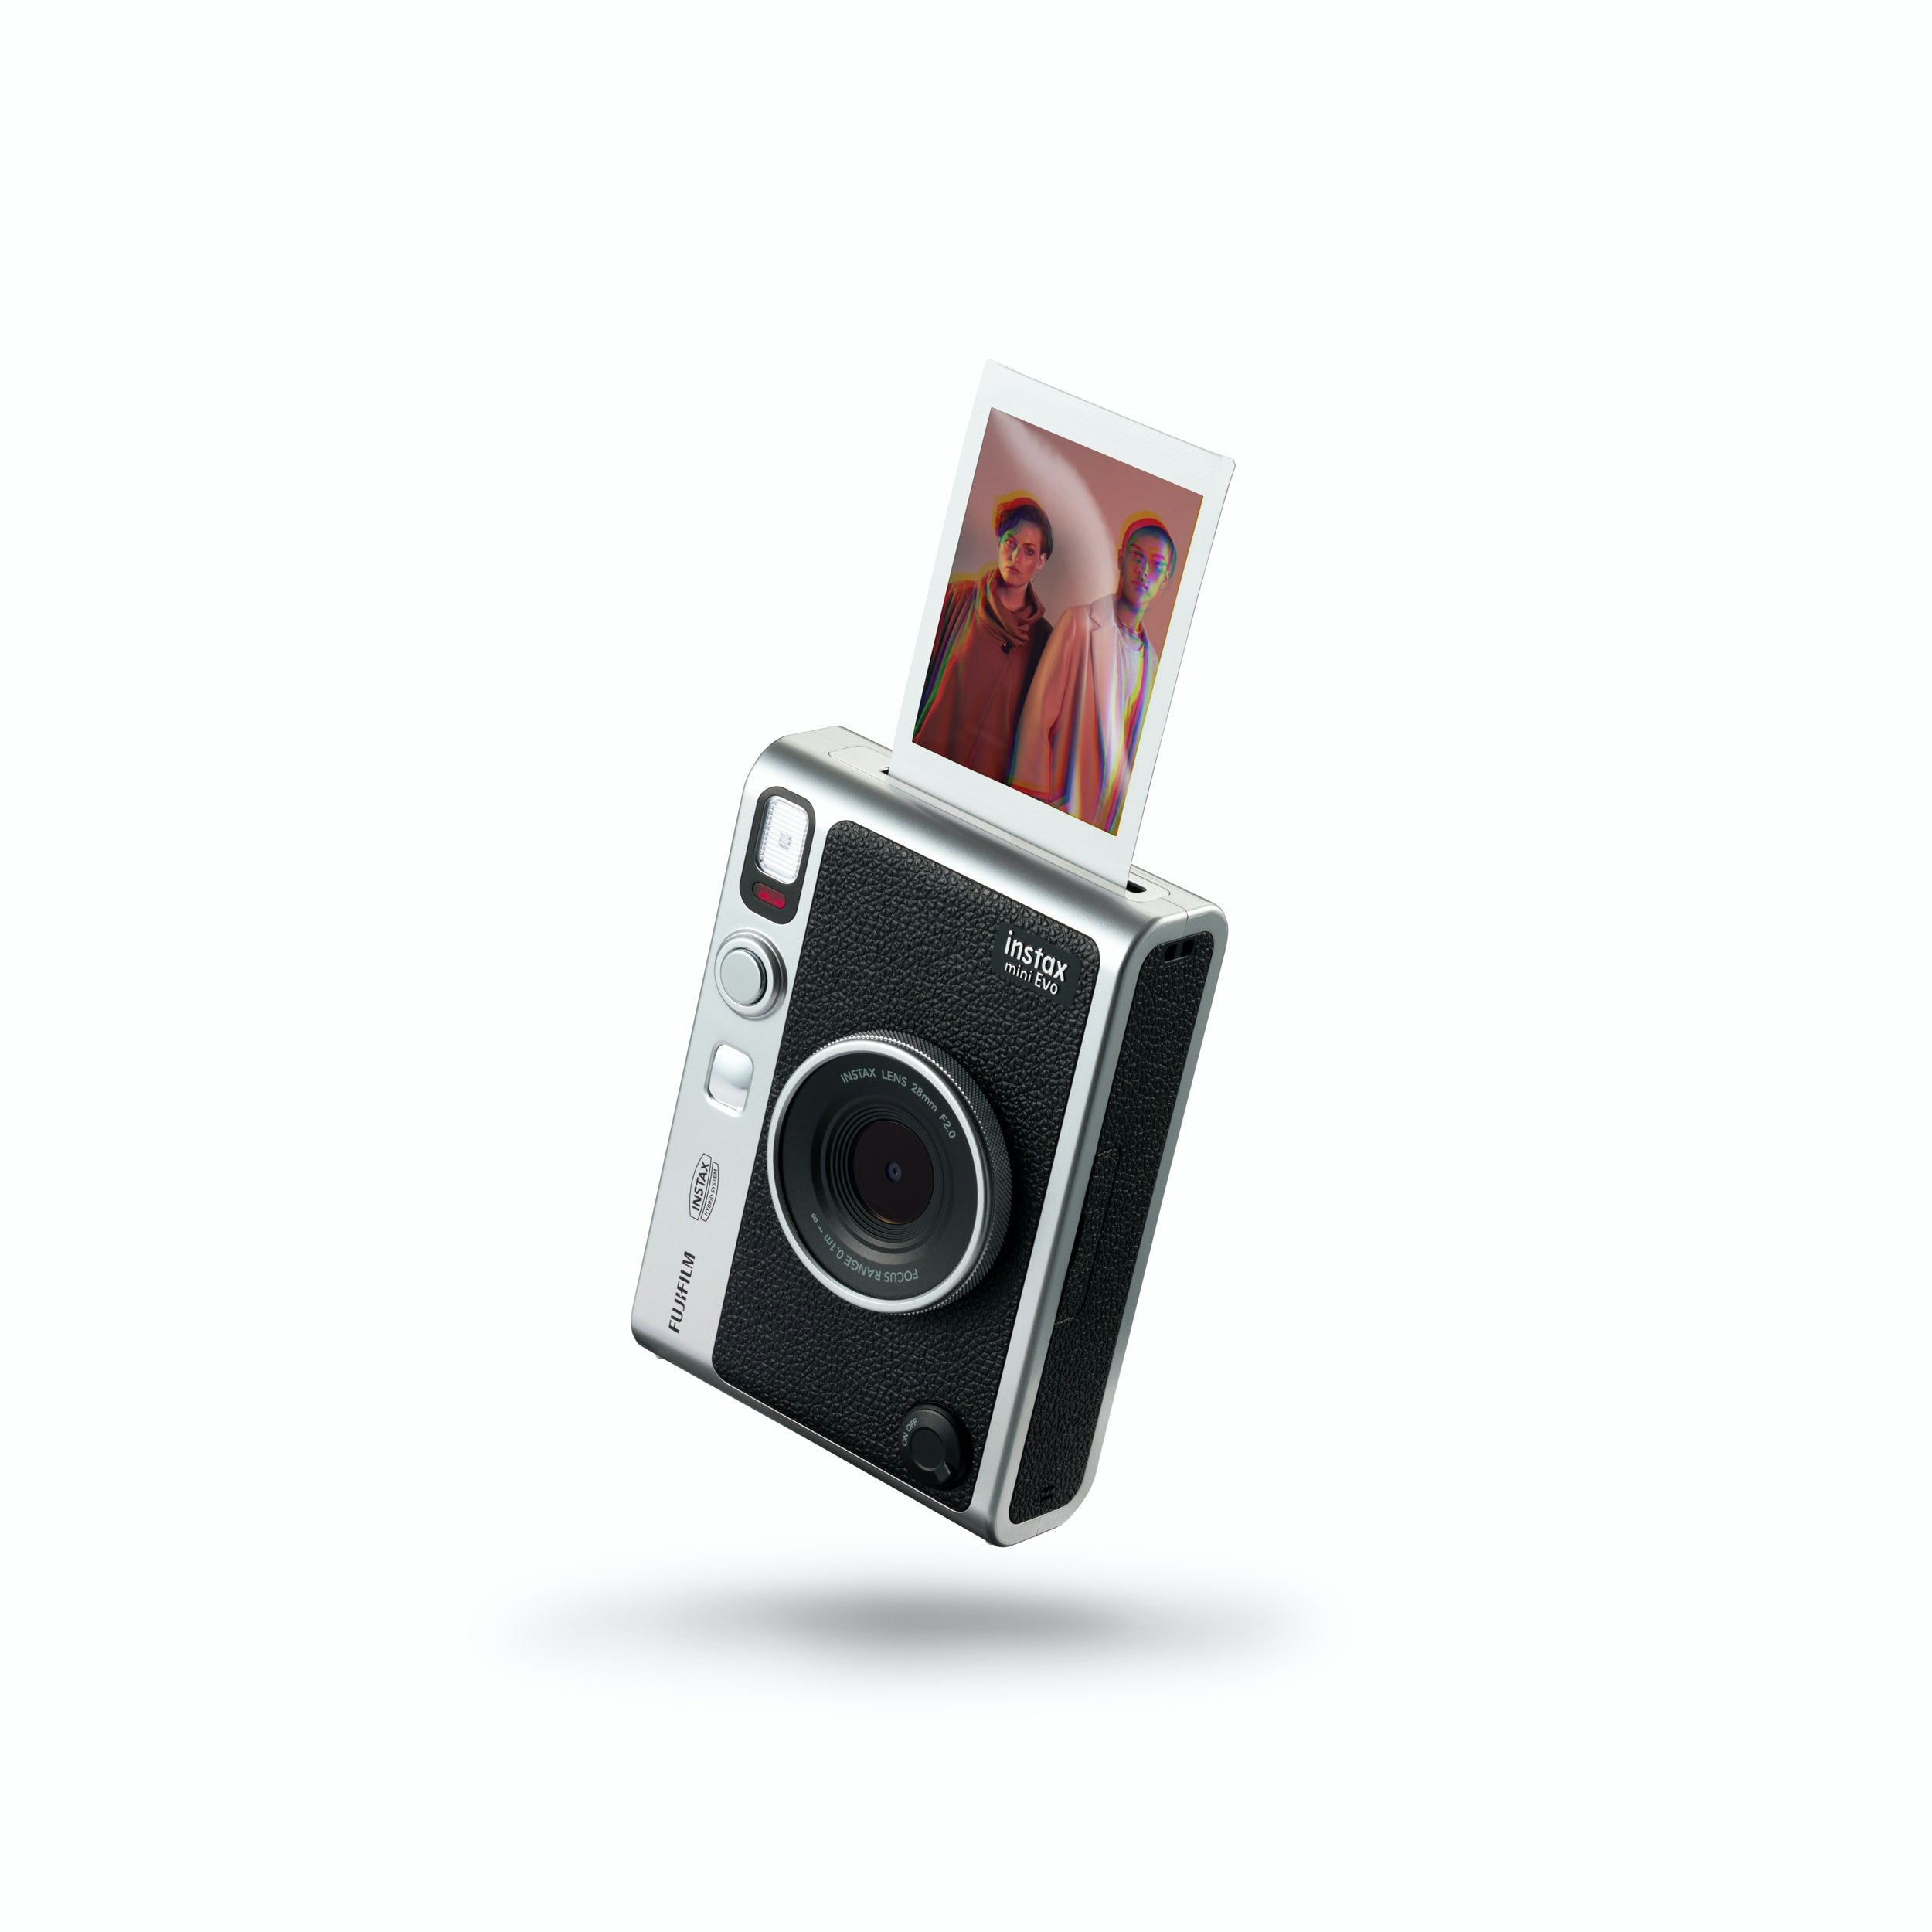 Fujifilm Instax Mini Evo review: more camera than toy - The Verge